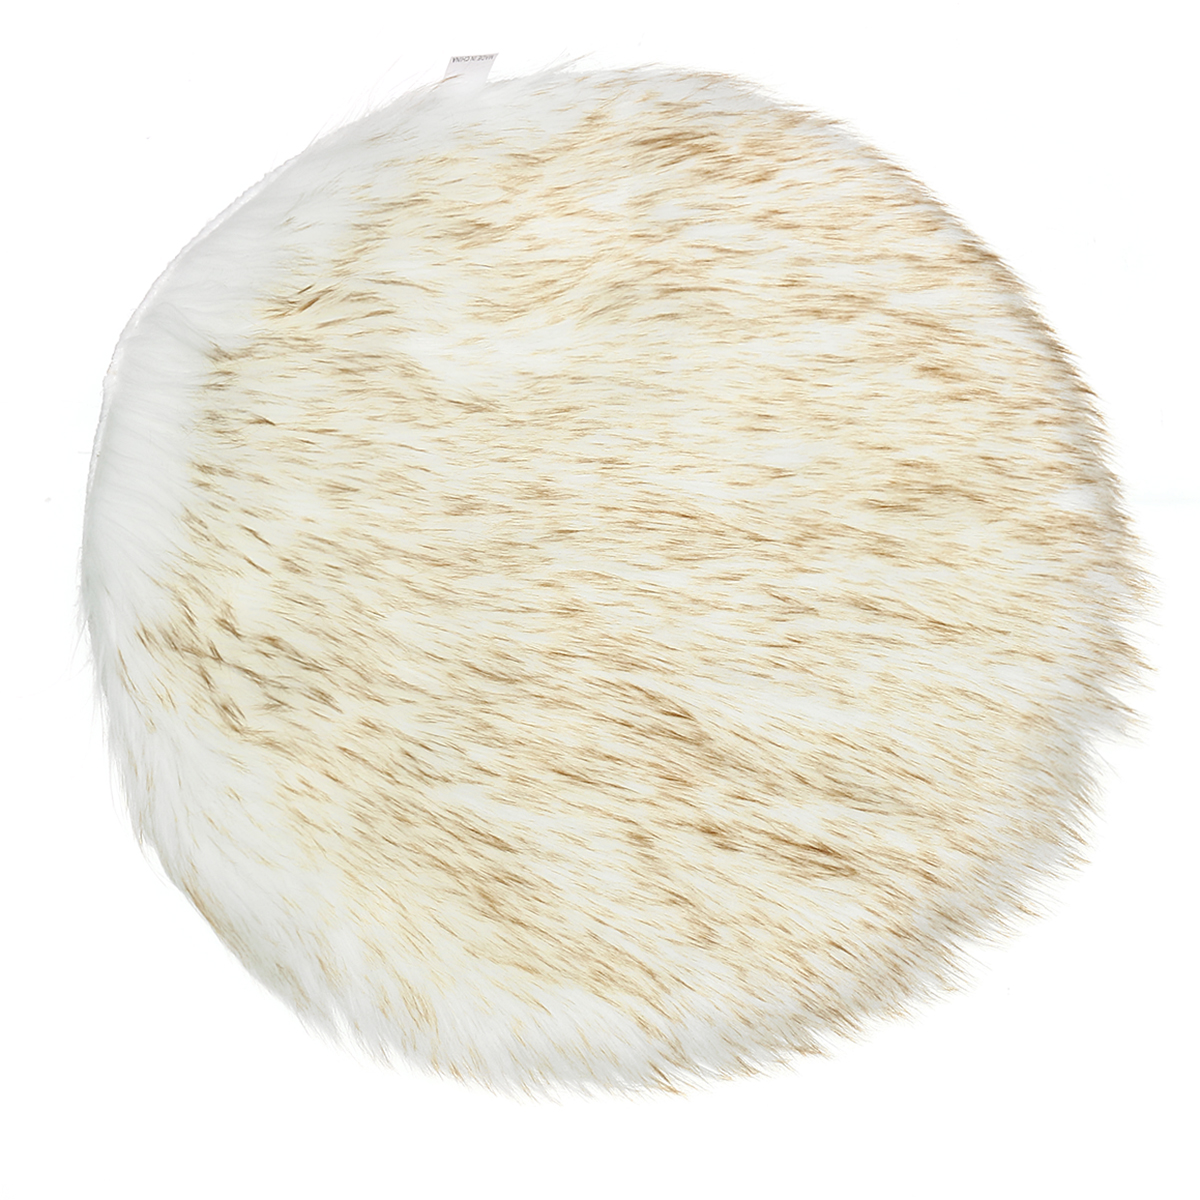 40cm-Fluffy-Rug-Round-Pad-Carpet-Hairy-Fur-Shag-Sheepskin-Bedroom-Floor-Mat-1621268-5